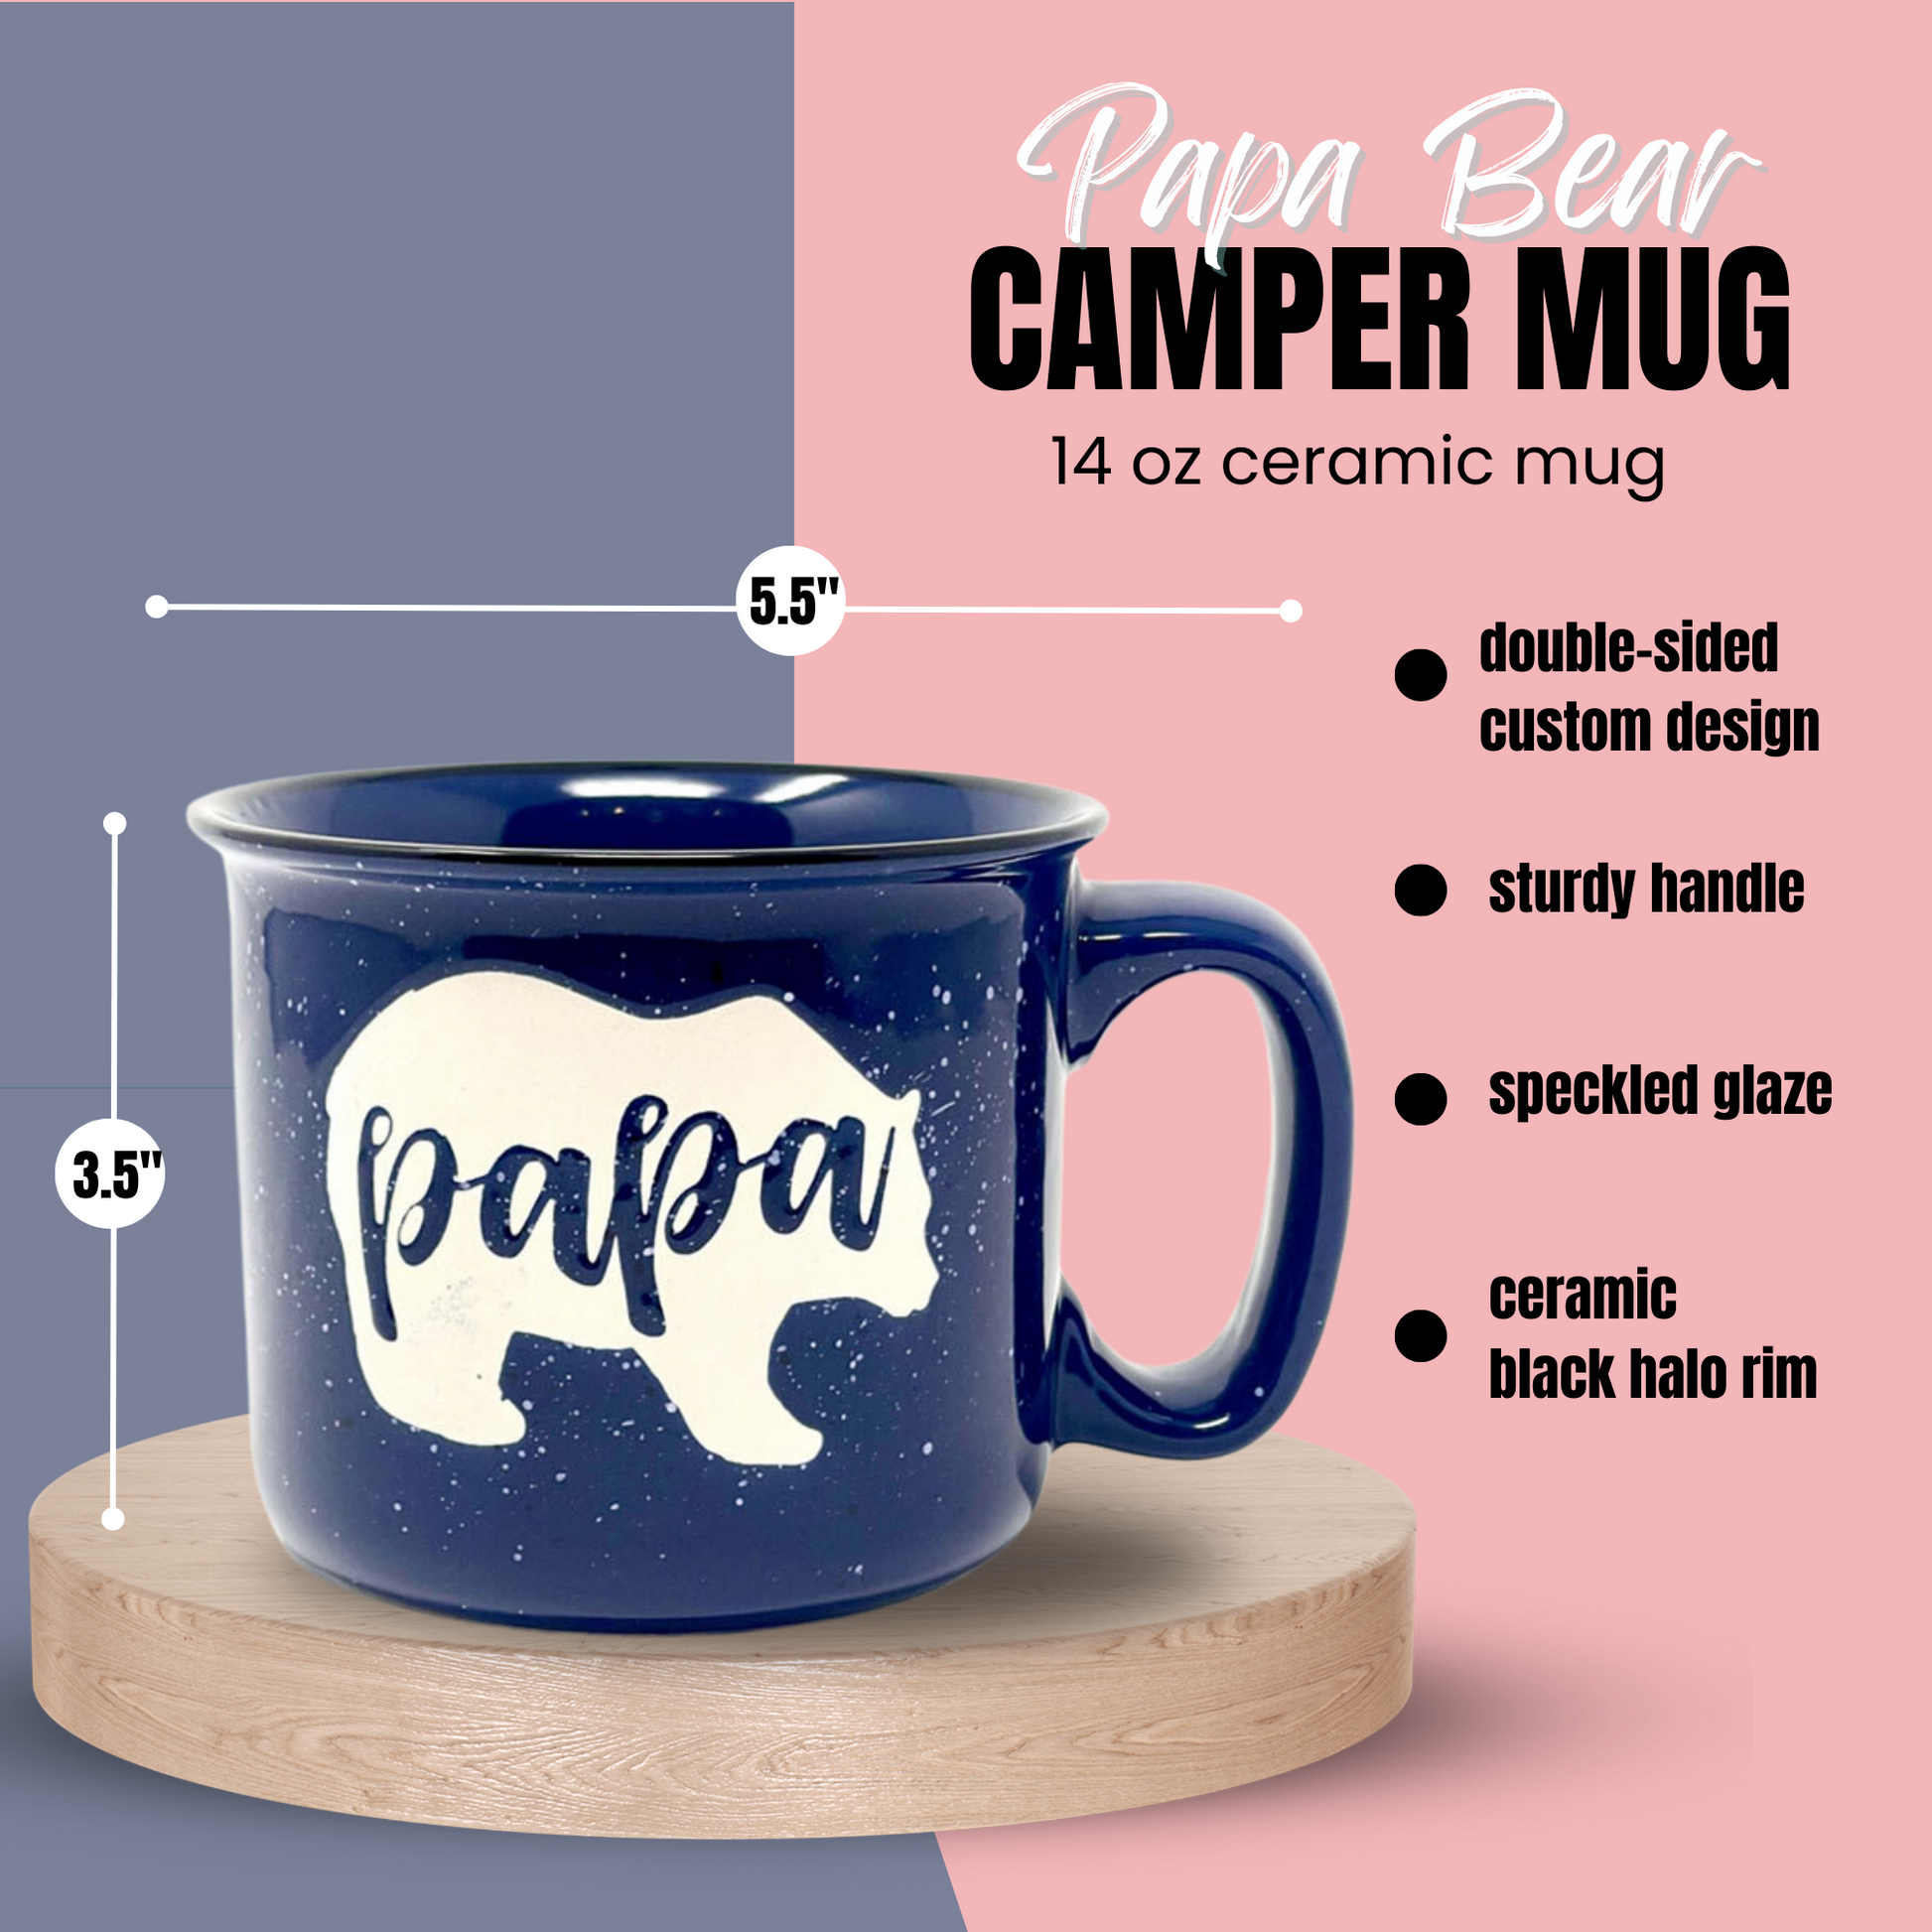 Mama bear / papa bear mug set of 2